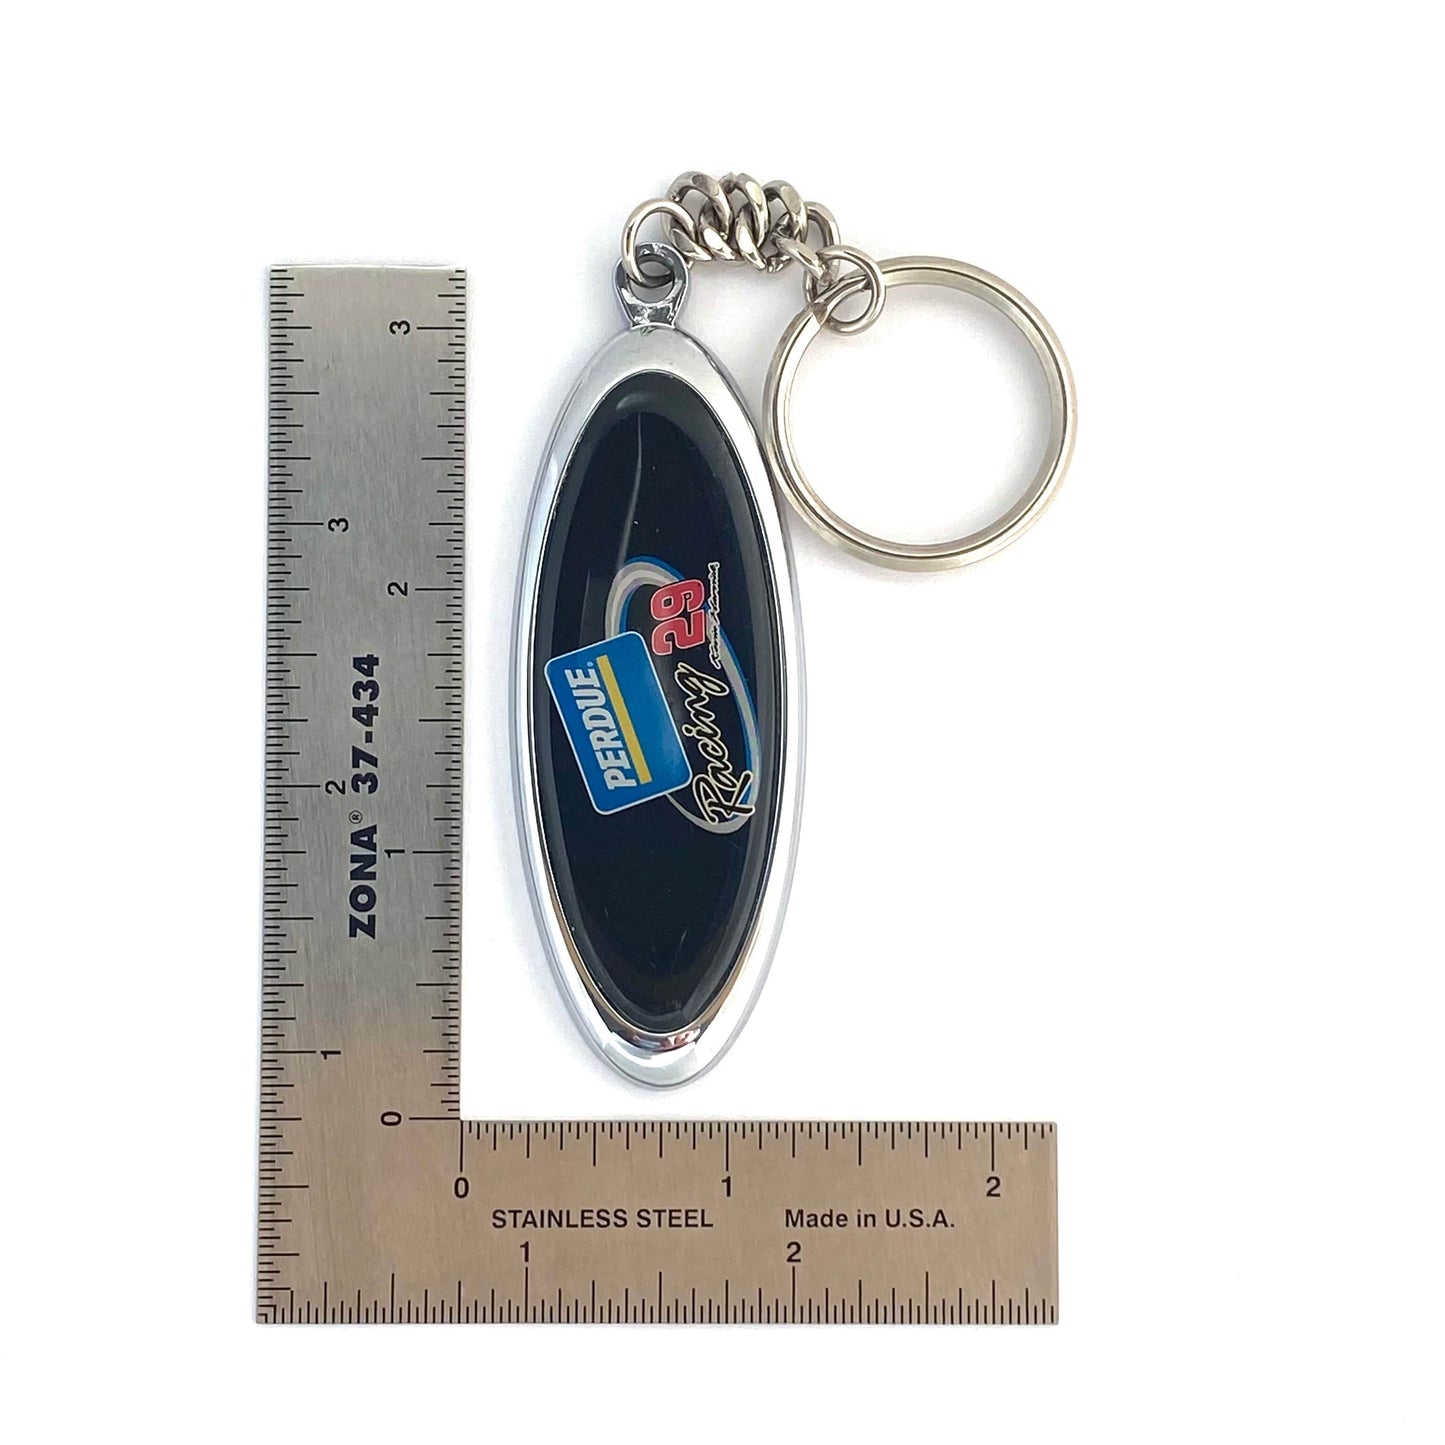 Vintage “Kevin Harvick #29 Perdue Racing” Enamel Keychain Key Ring Souvenir